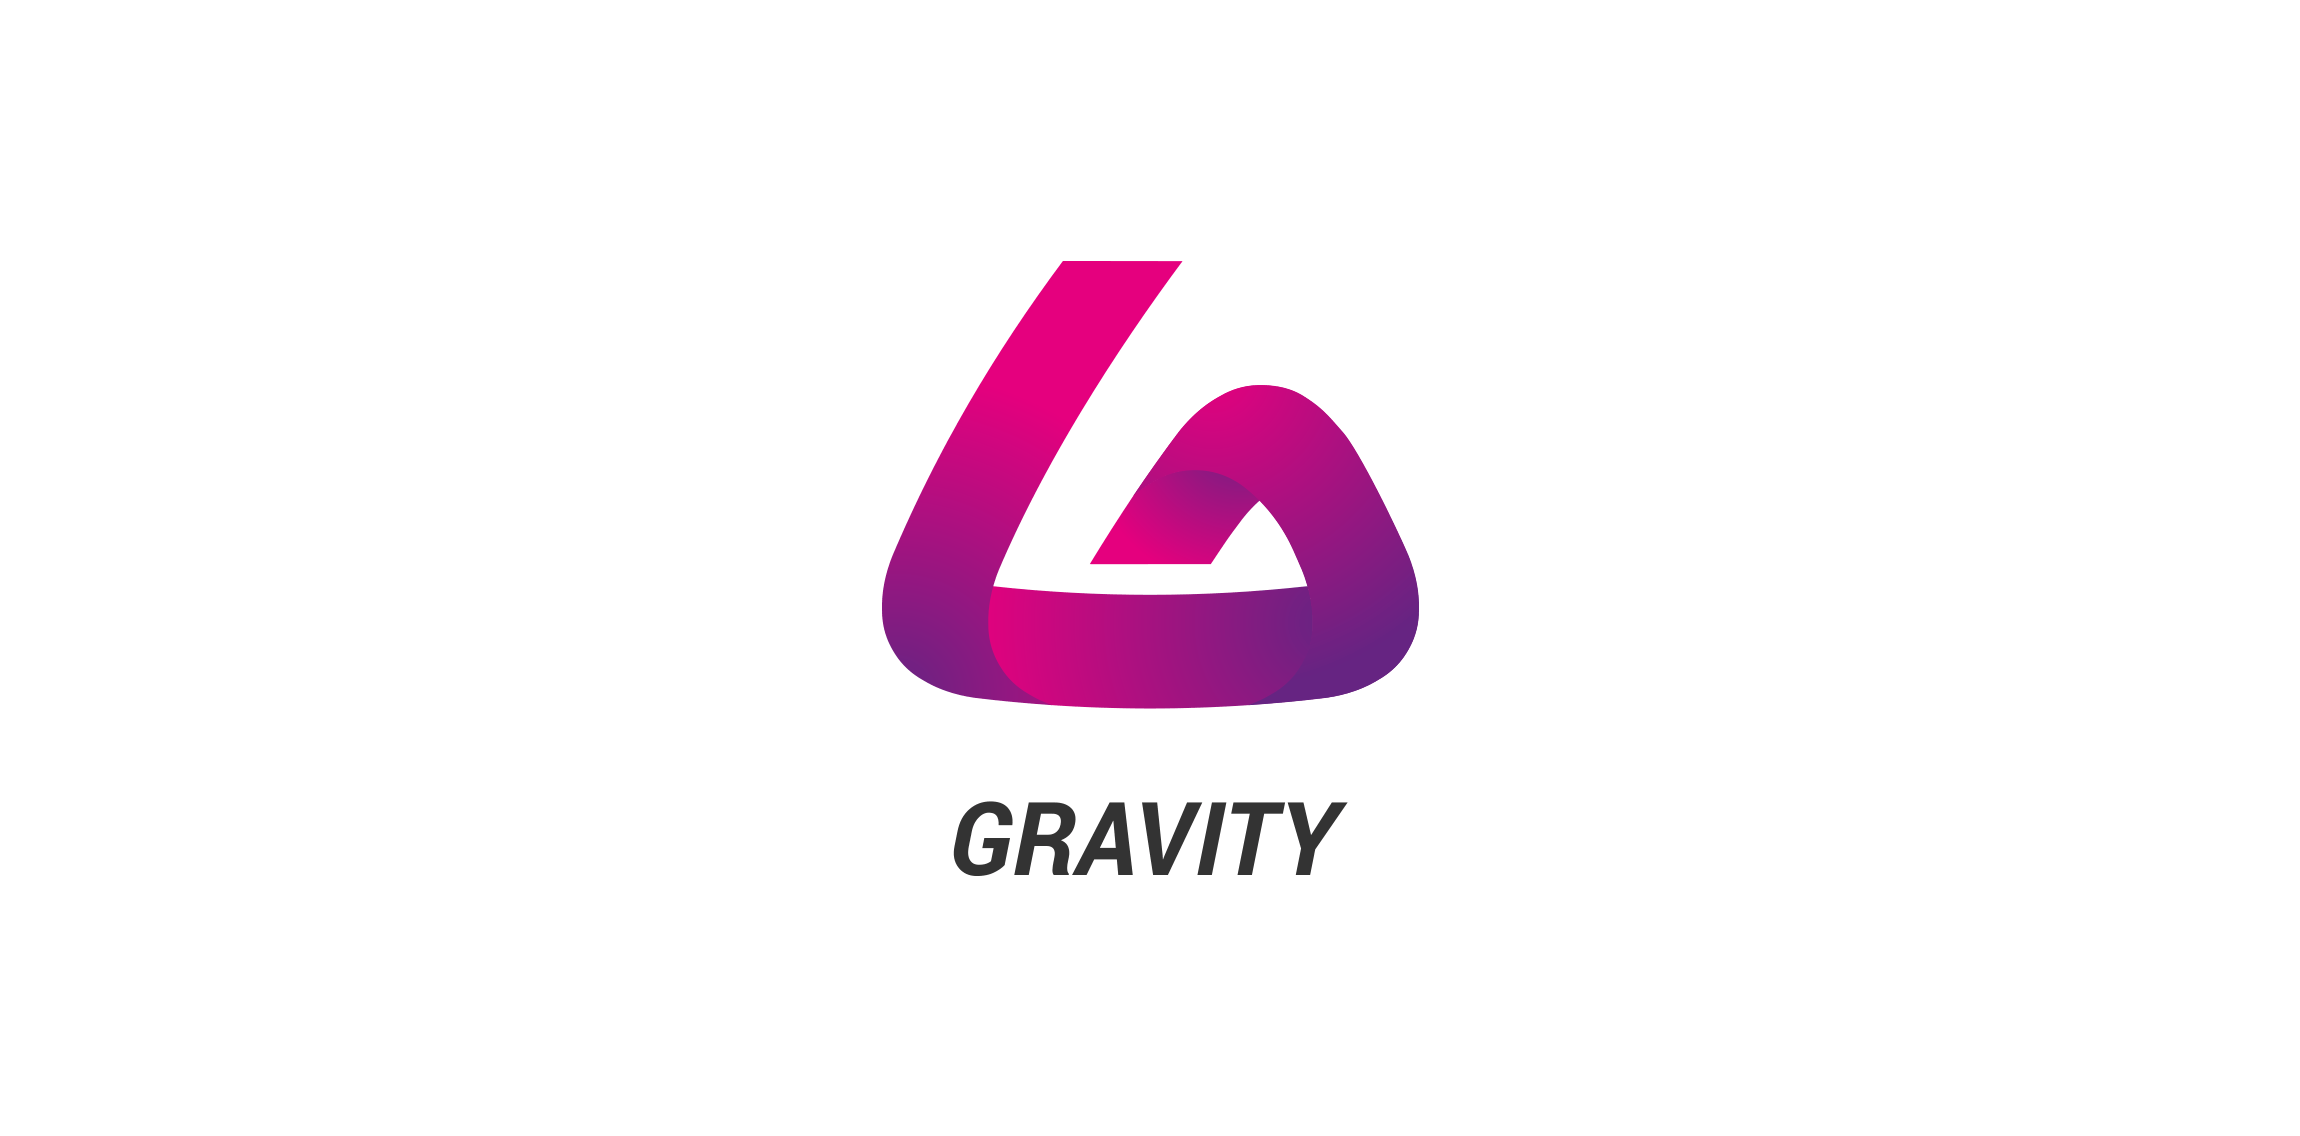 Gravity Logo - Gravity | LogoMoose - Logo Inspiration